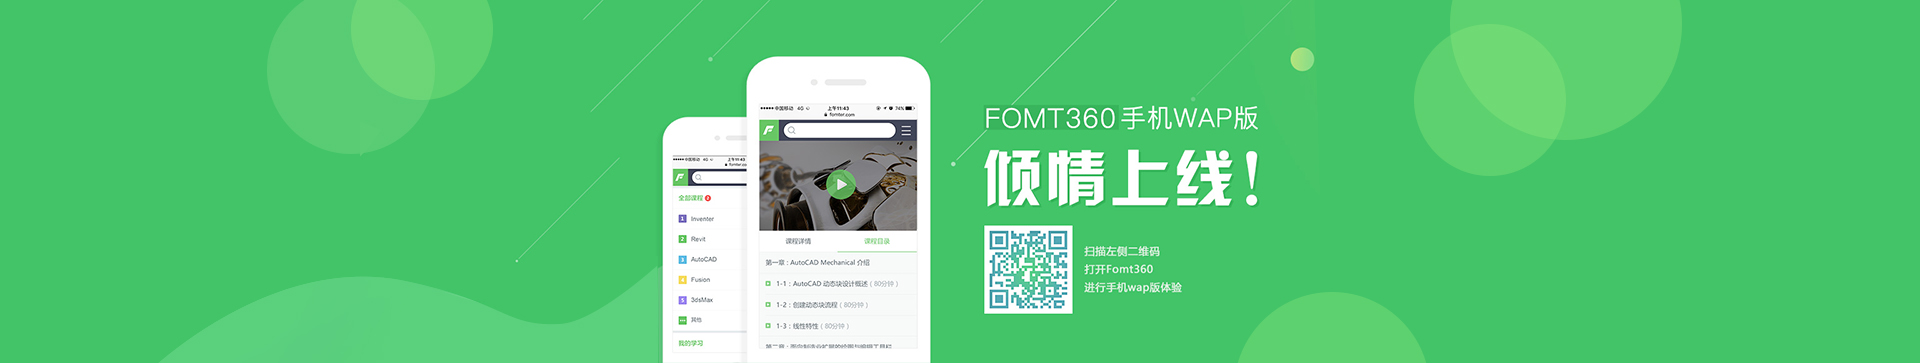 FOMT360手机wap版上线